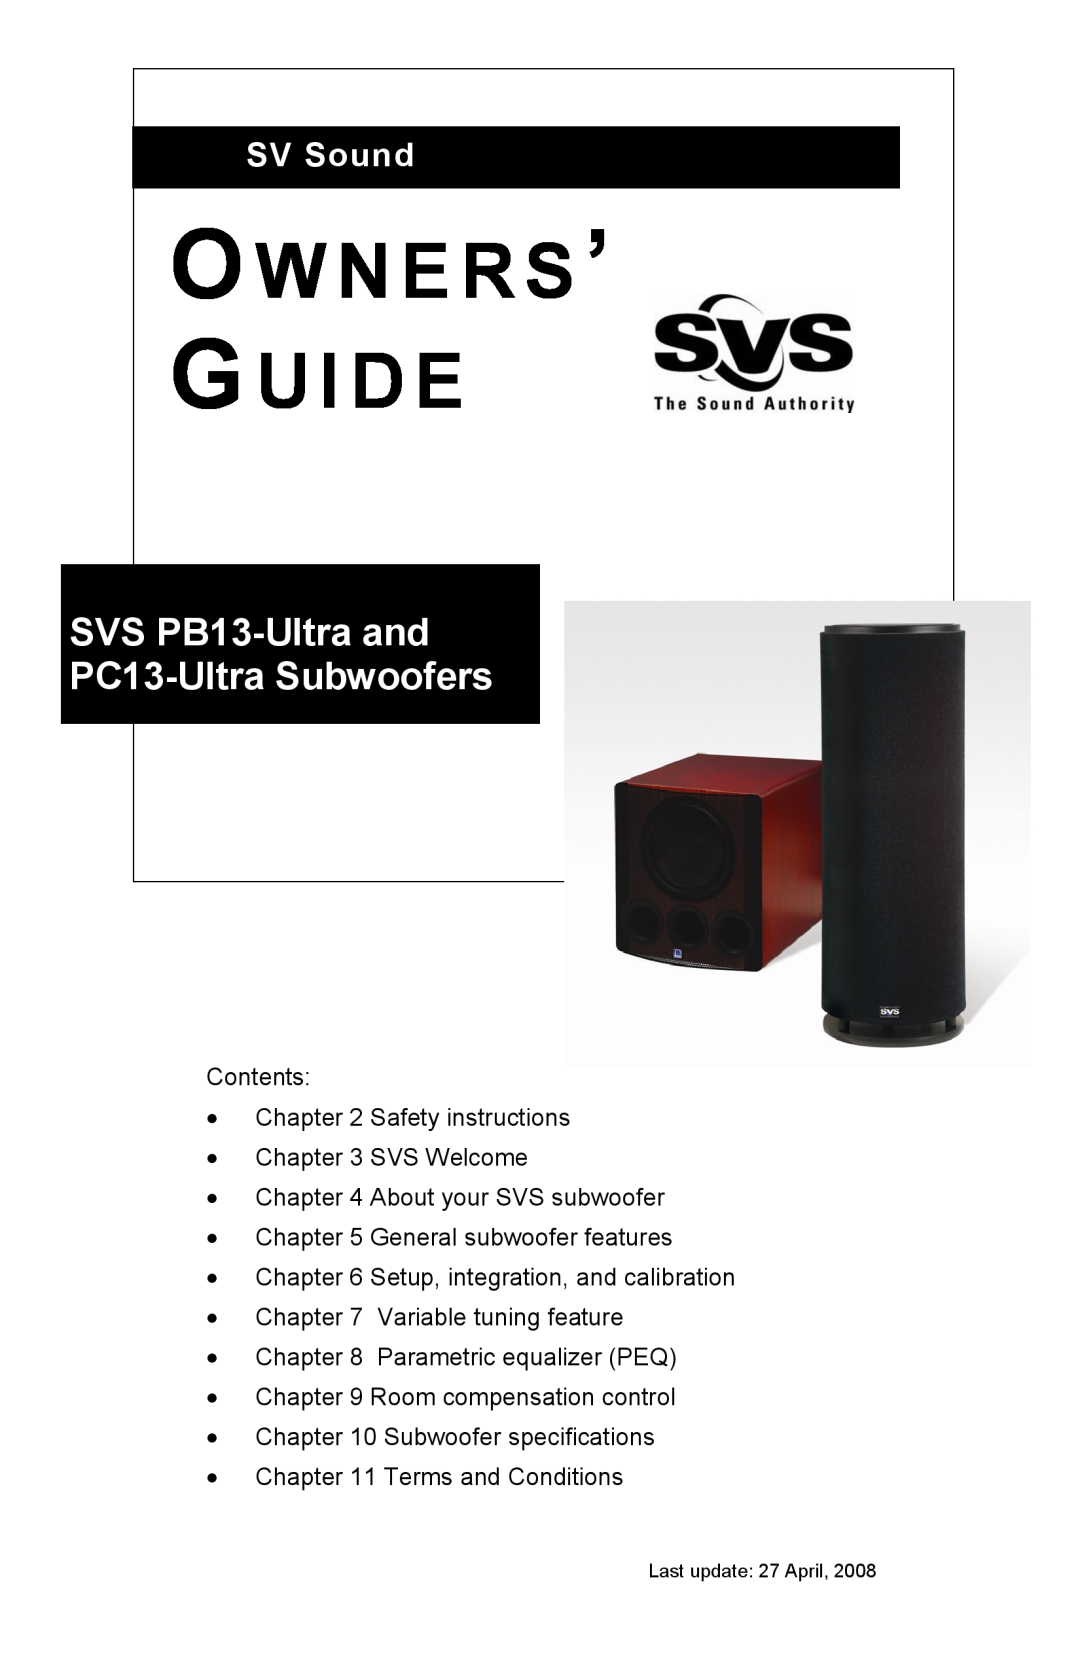 SV Sound specifications O W N E R S ’ G U I D E, SVS PB13-Ultraand PC13-UltraSubwoofers, SV Sound 